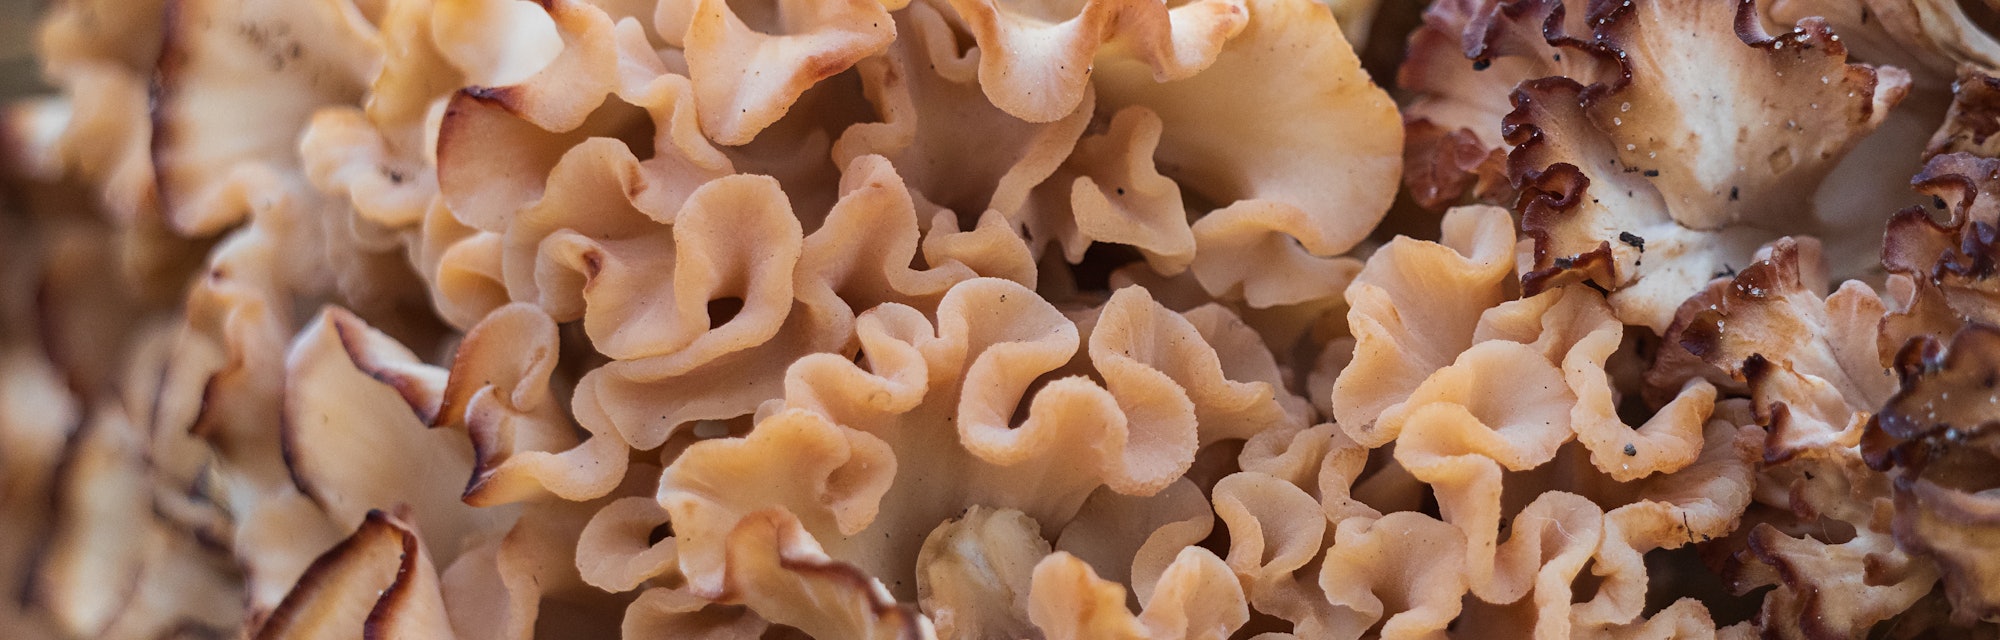 Wood cauliflower mushroom is a good edible mushroom, but is a parasitic wood-destroying fungus